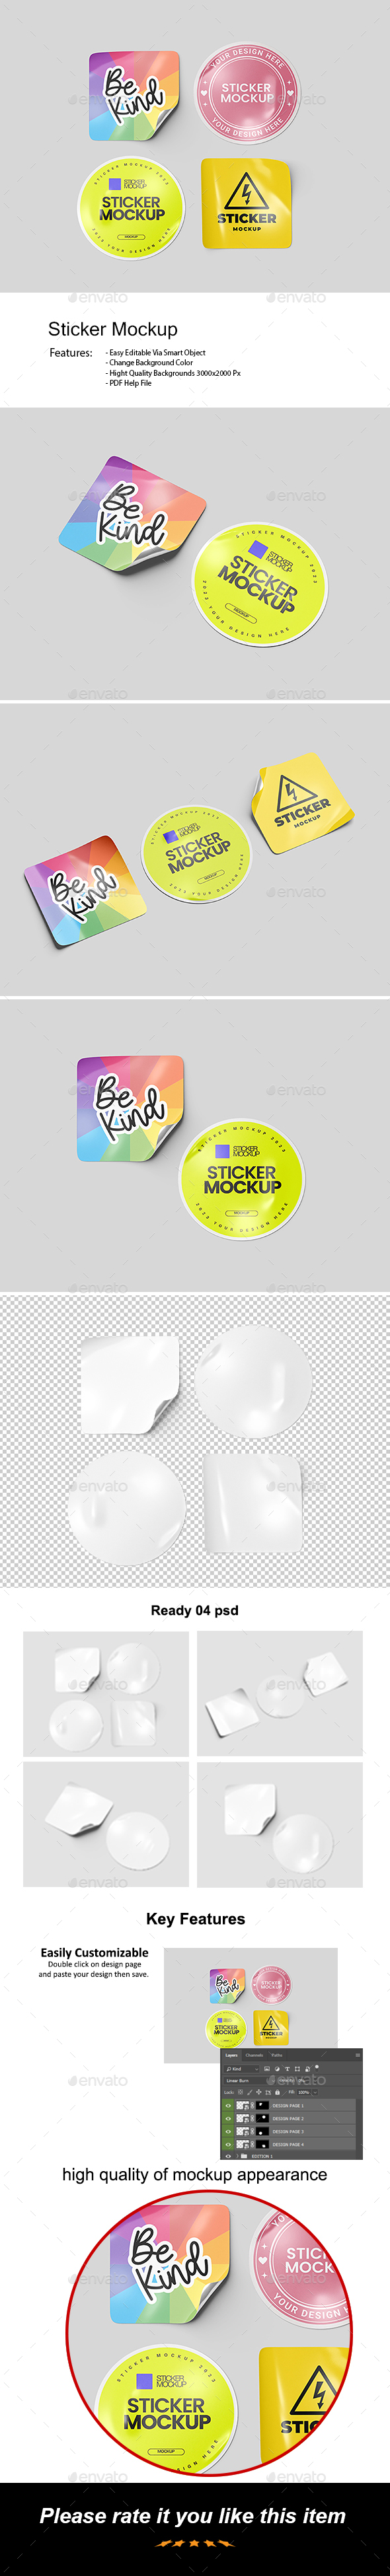 [DOWNLOAD]Sticker Mockup